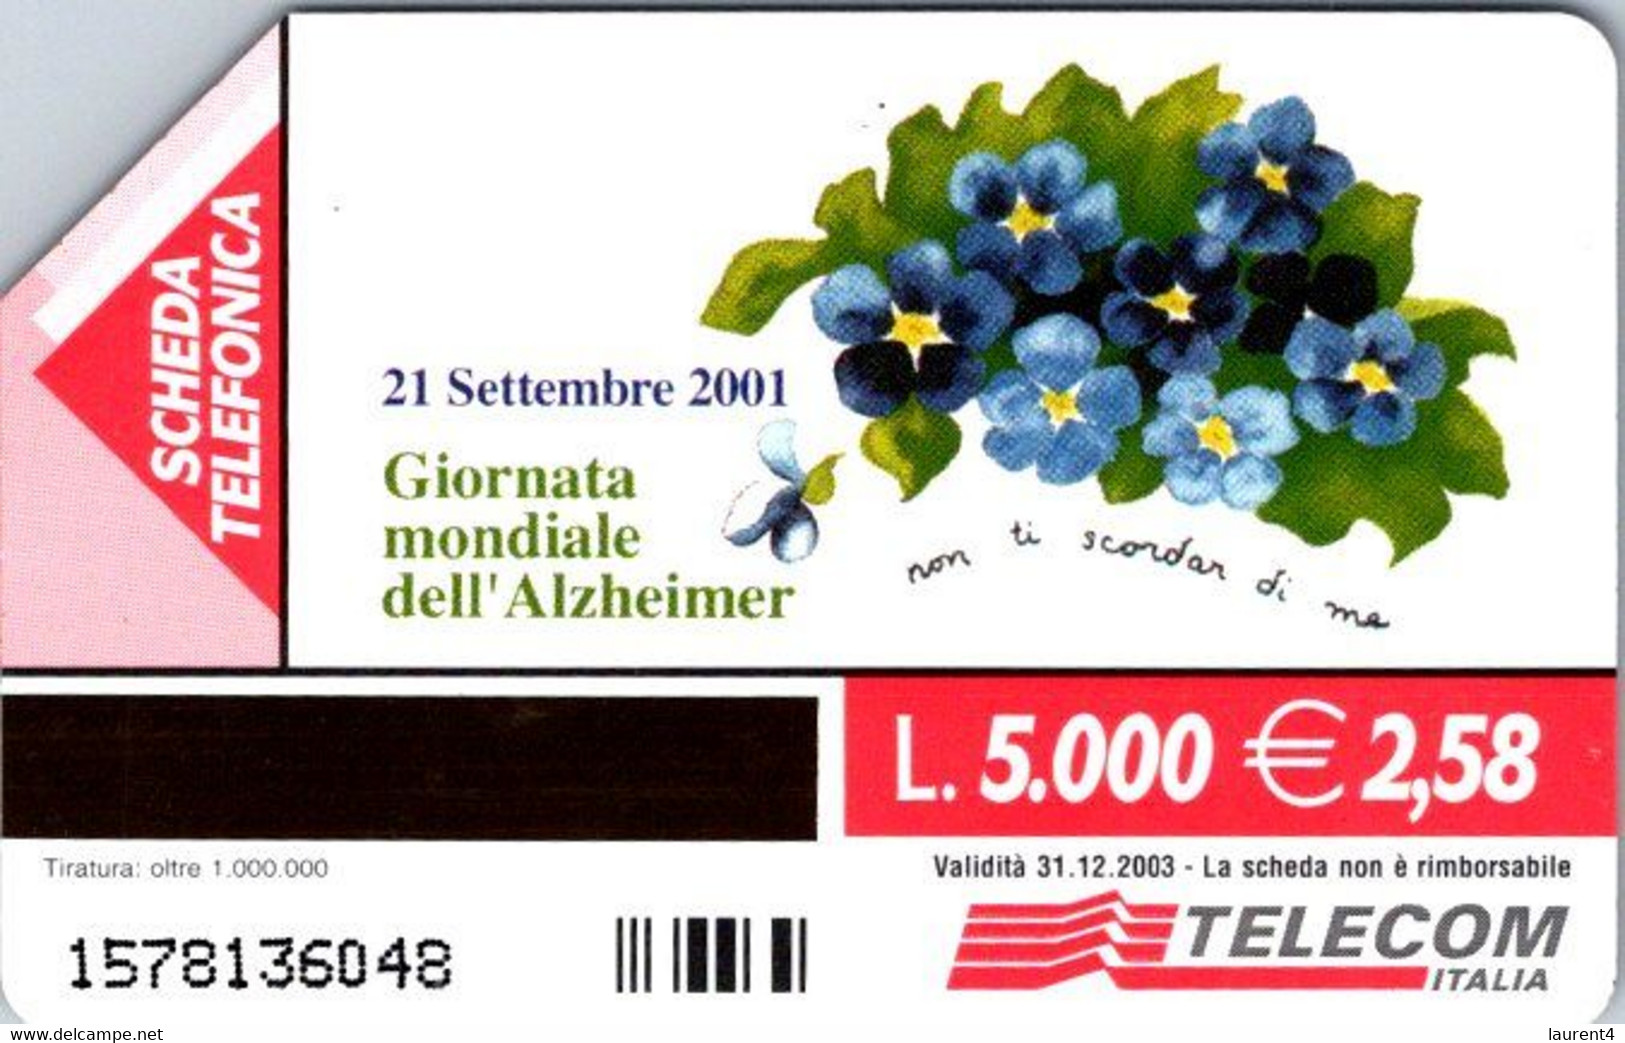 (24-6-2022 G) Phonecard -  Italy - (1 Phonecard)  2.58 Euro - Alzheimer - A Identificar